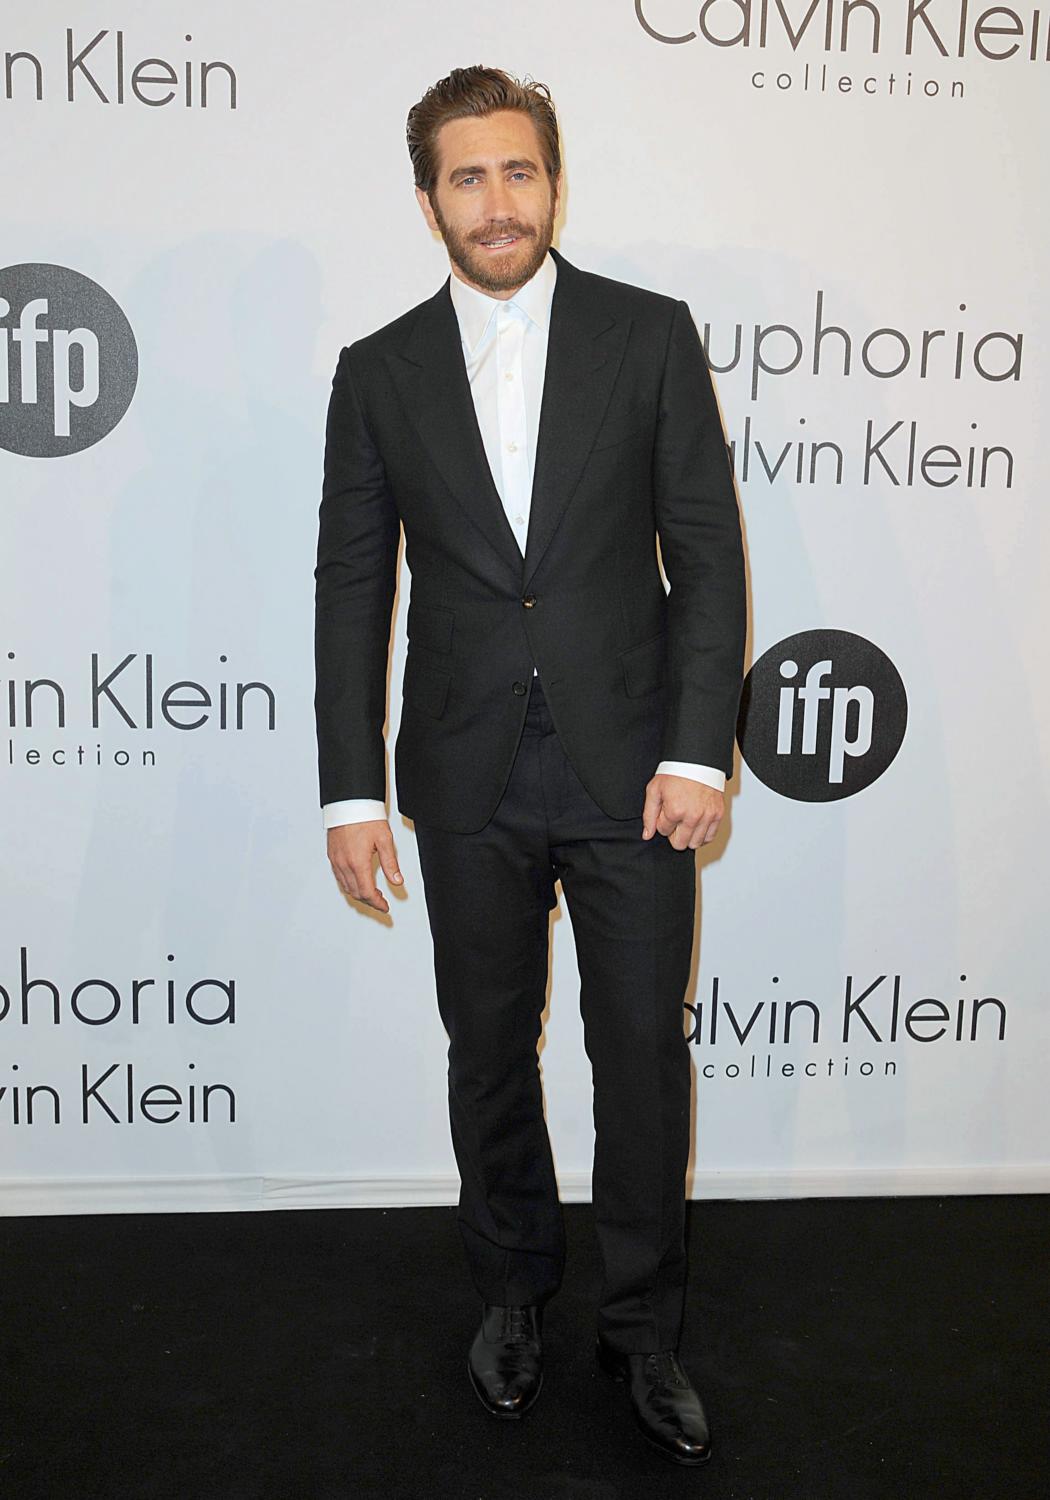 Jake Gyllenhaal attendse Calvin Klein Party